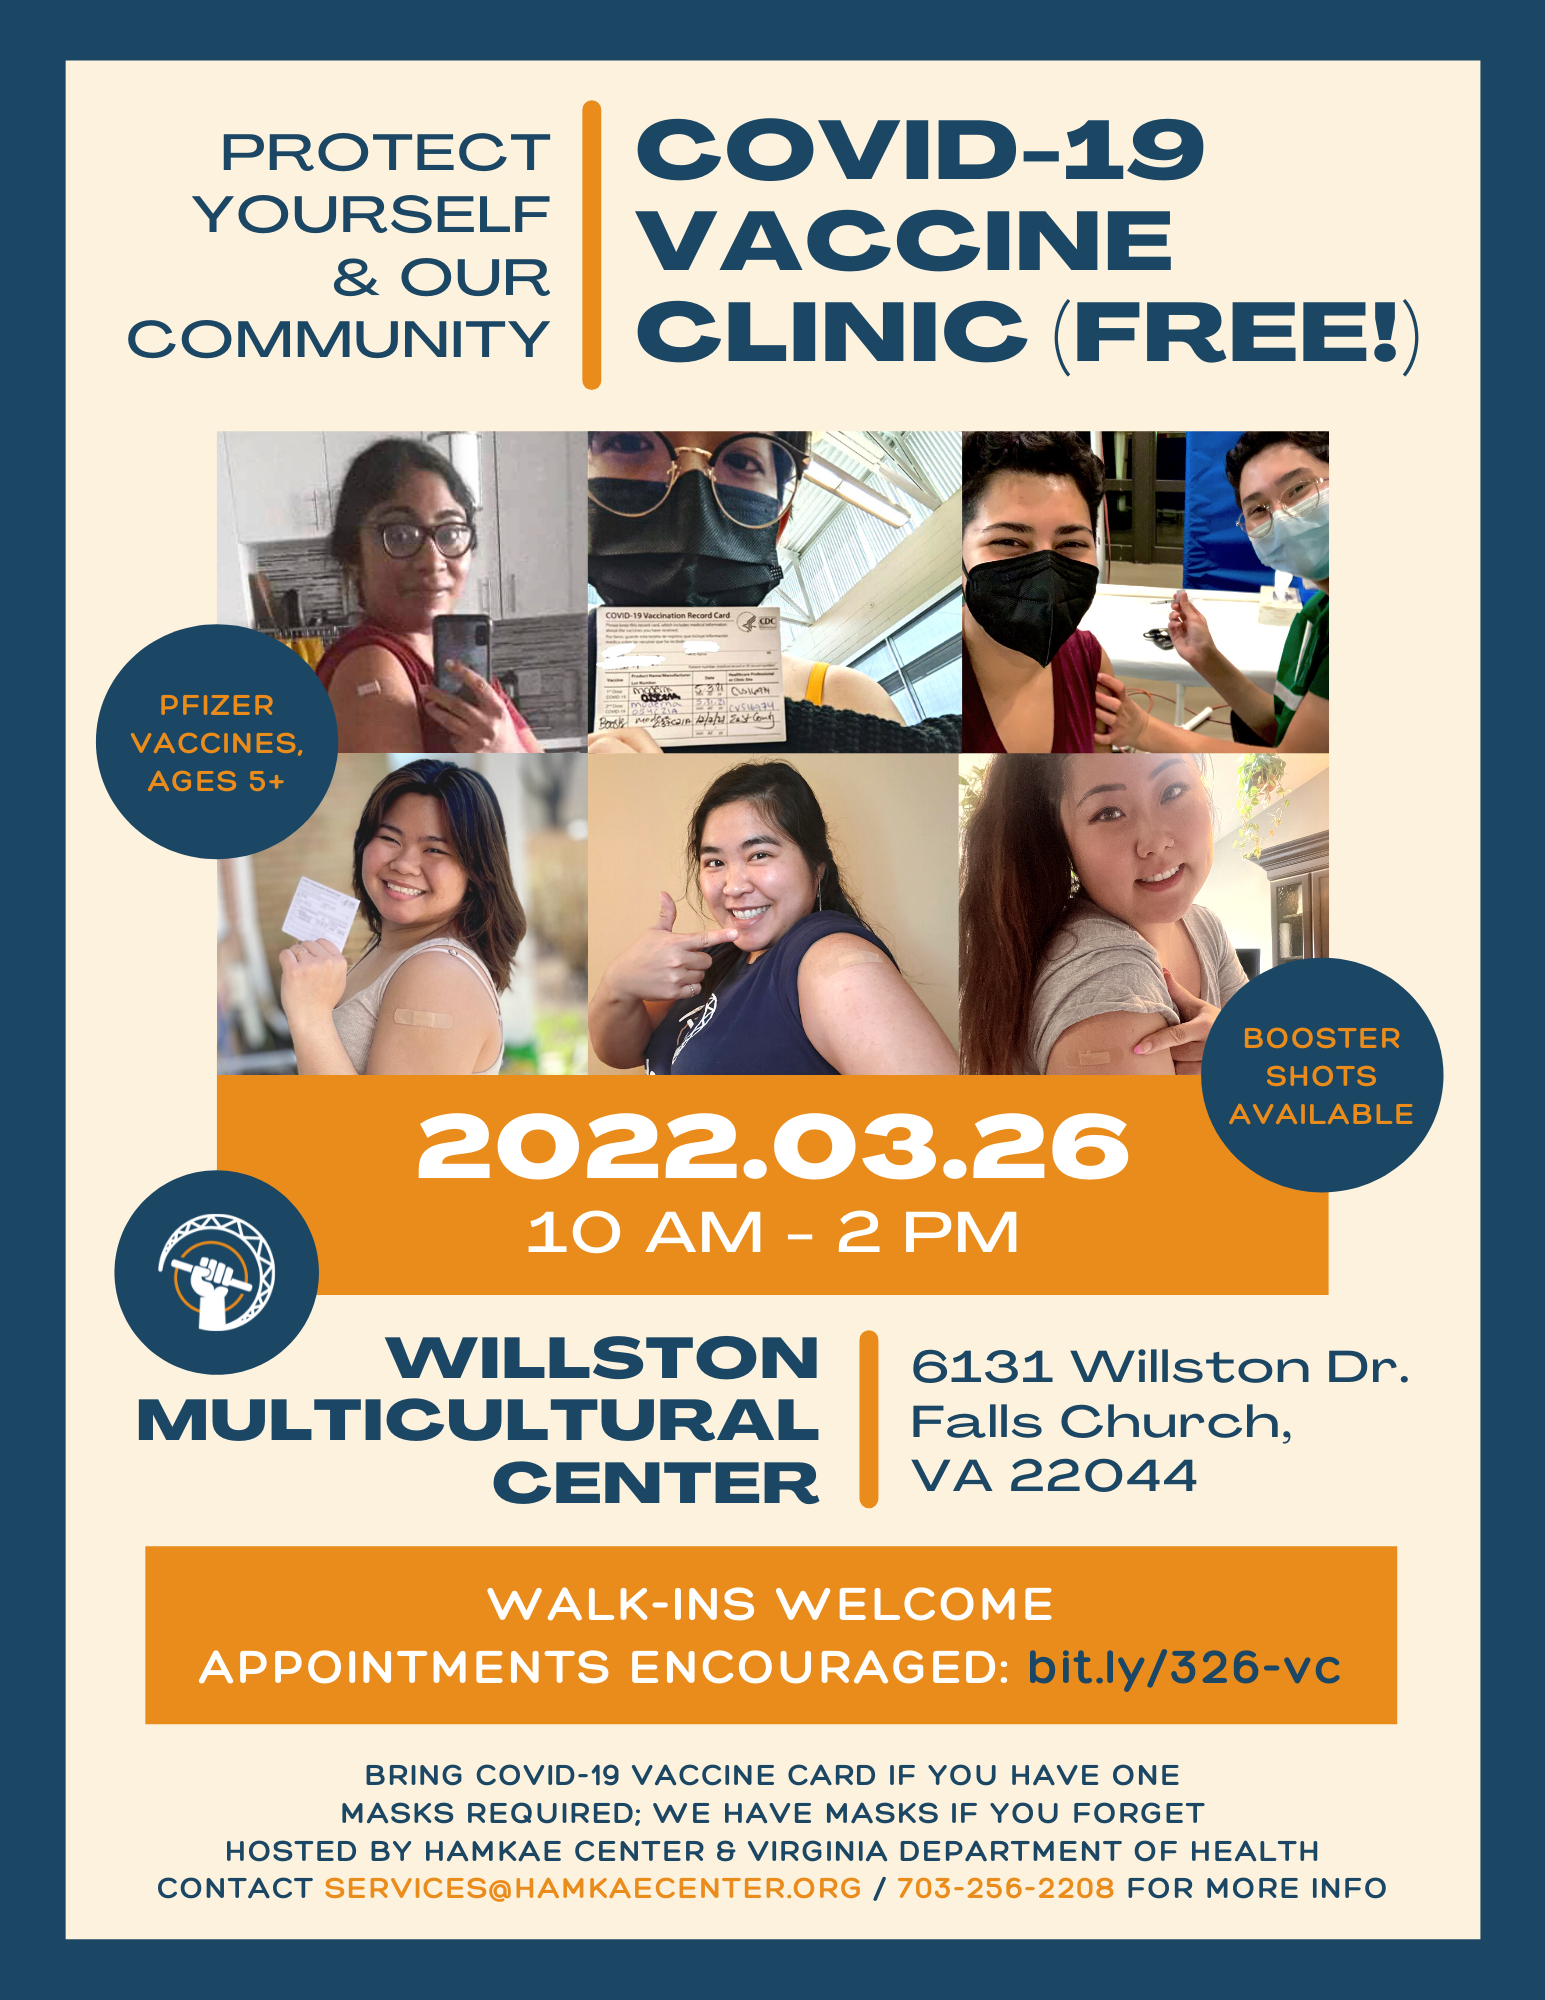 Hamkae Center's free COVID-19 Vaccine Clinic on March 26, 2022 from 10am-2pm at Willston Multicultural Center (Falls Church, VA)